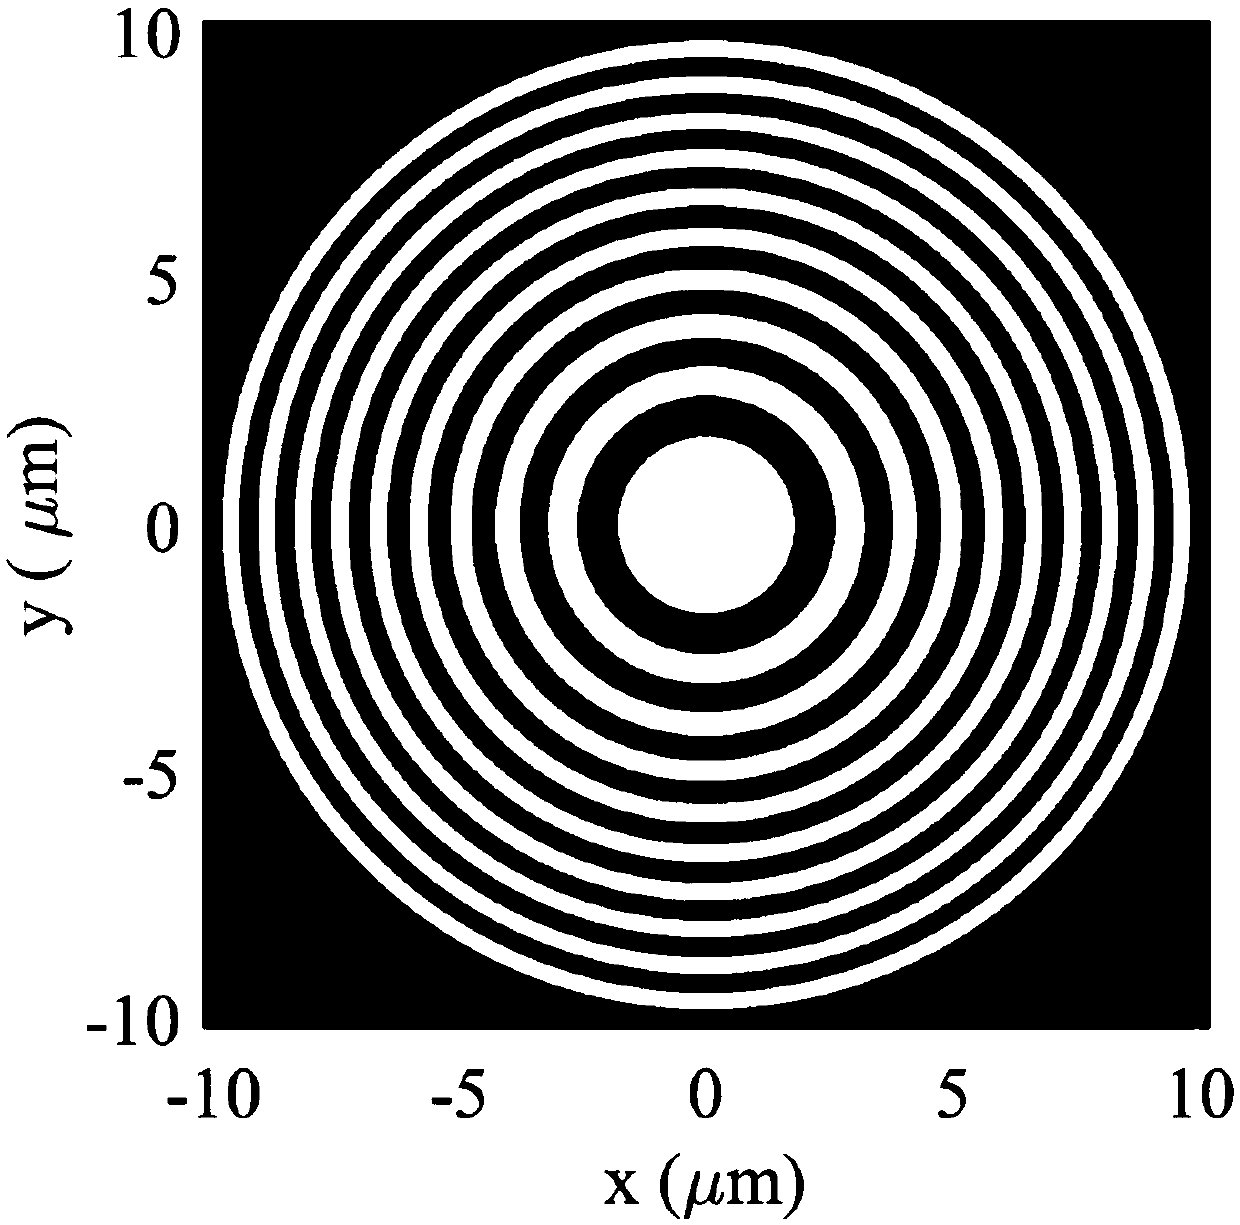 Fresnel zone plate spectrum confocal measurement method